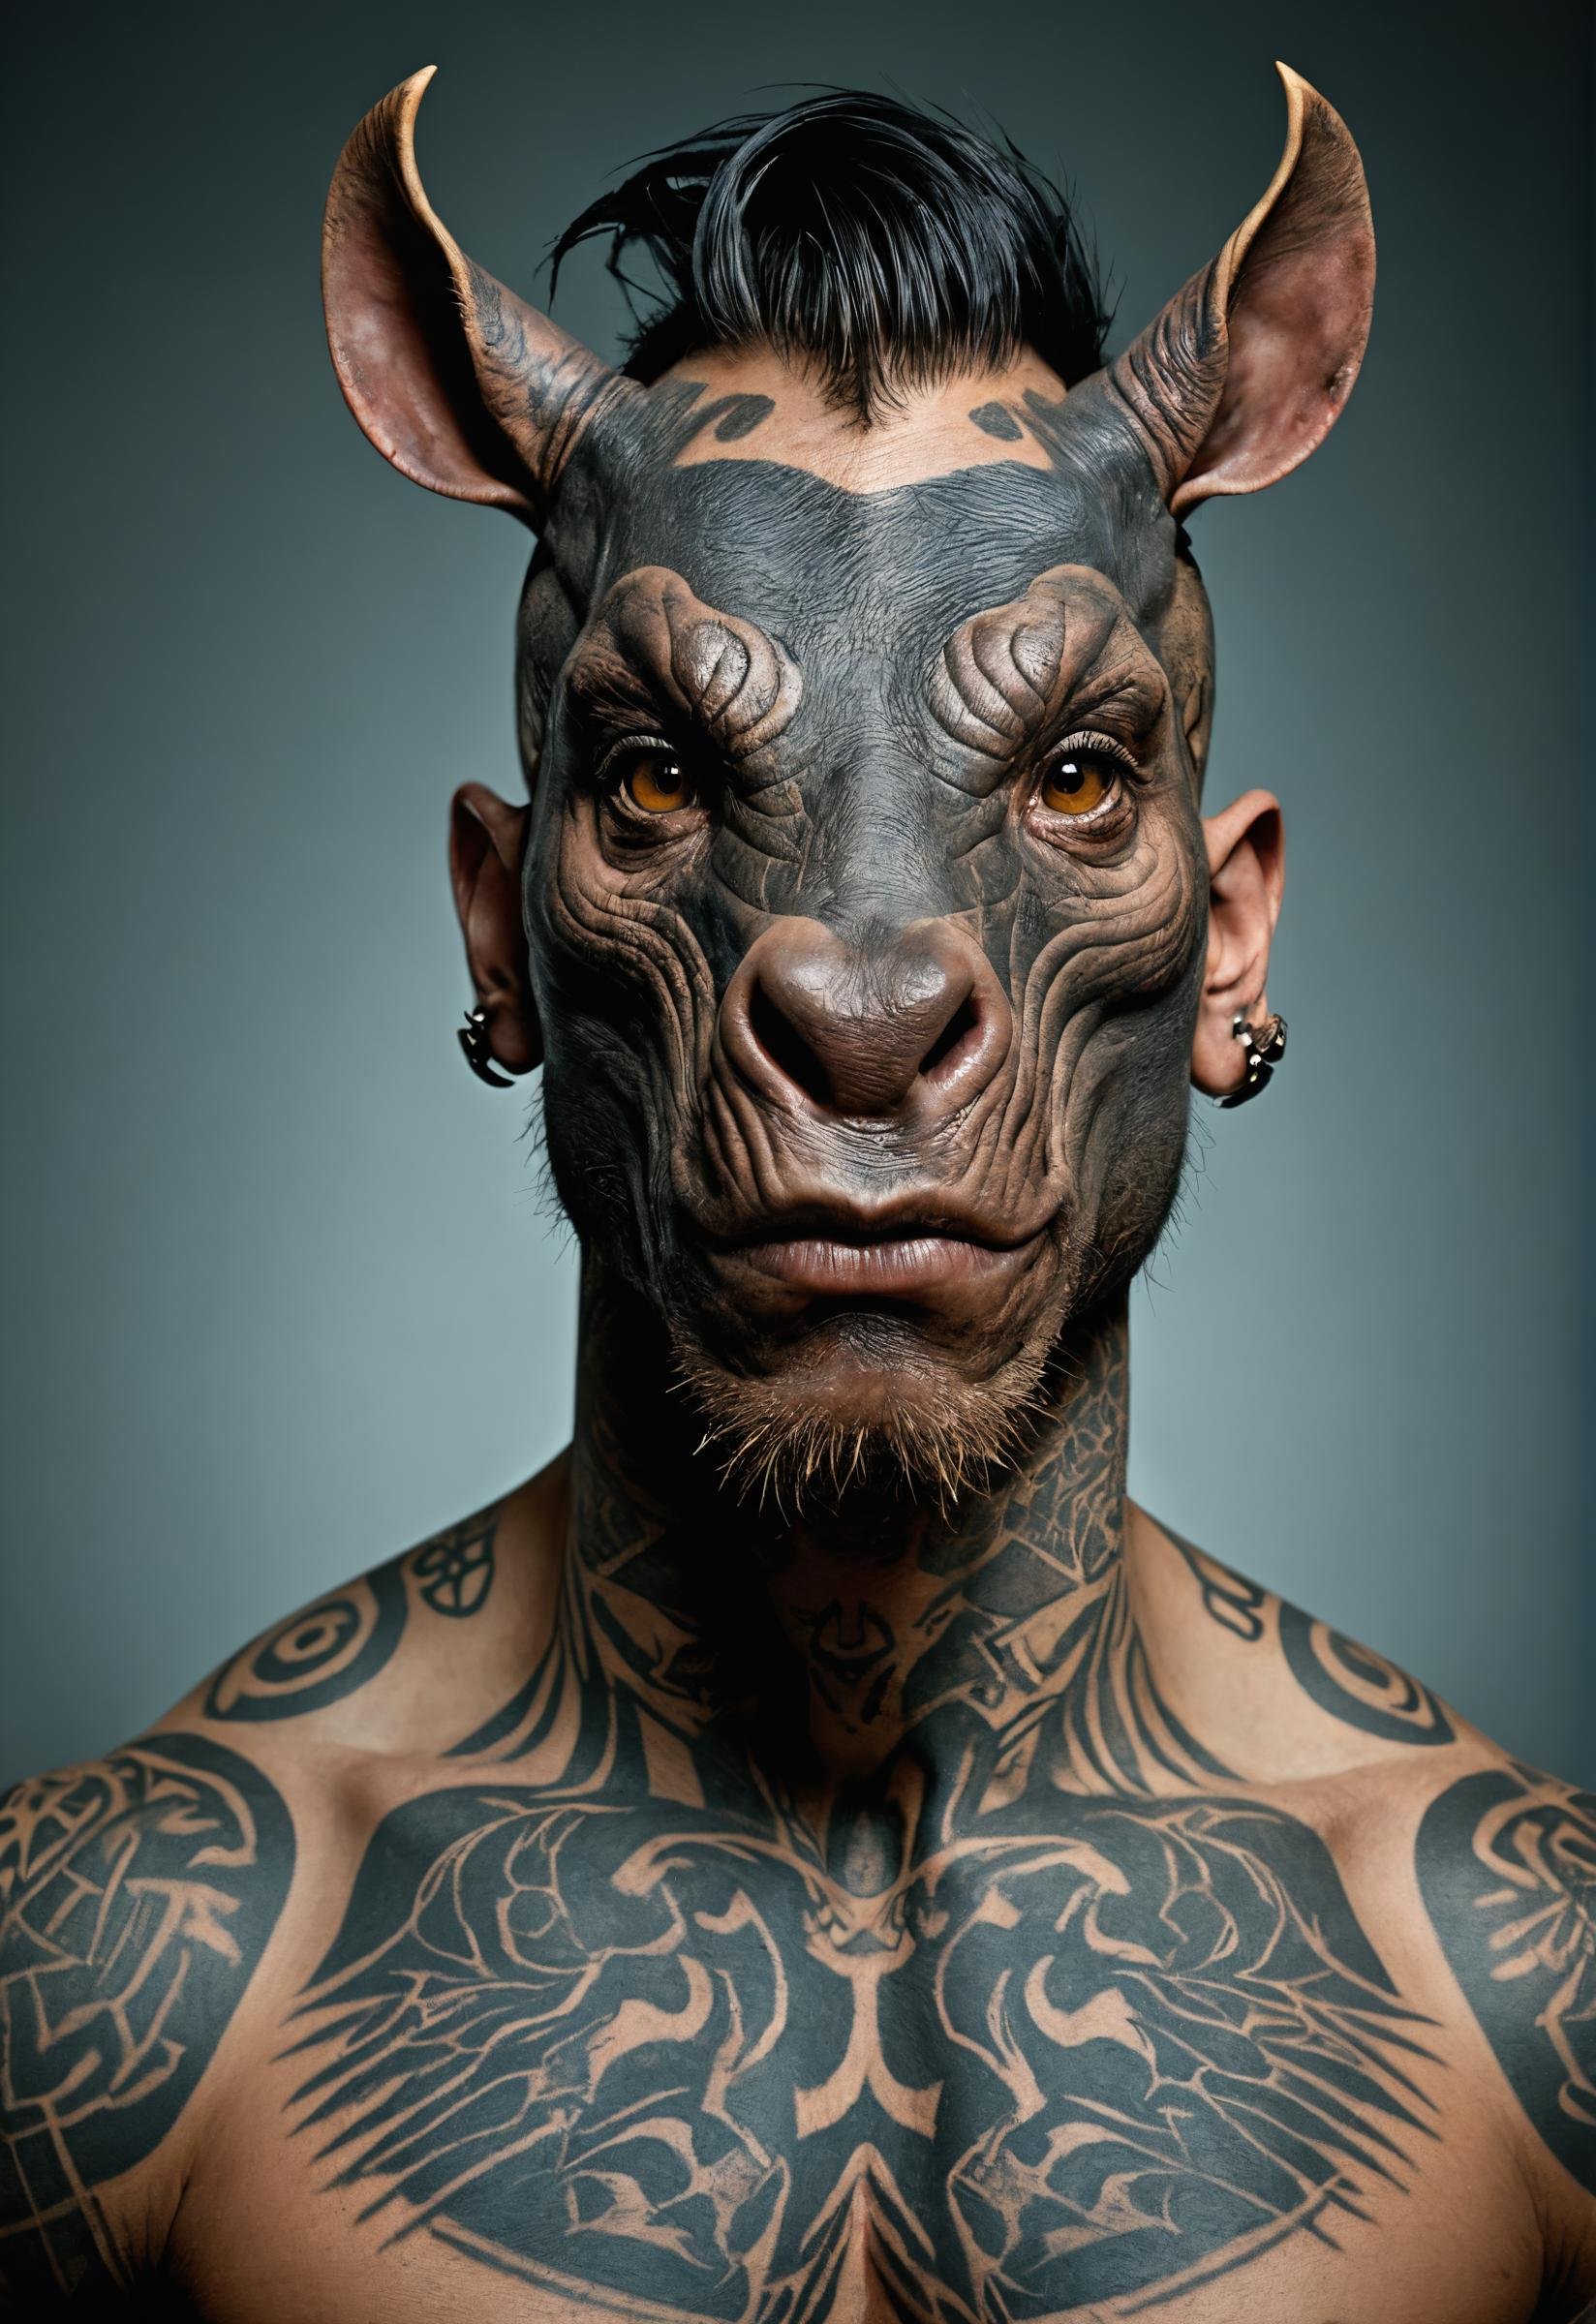 photo,mutation,semihuman with semirhinoceros face,studio lighting,tattoos  <lora:Photoreal:1.1>